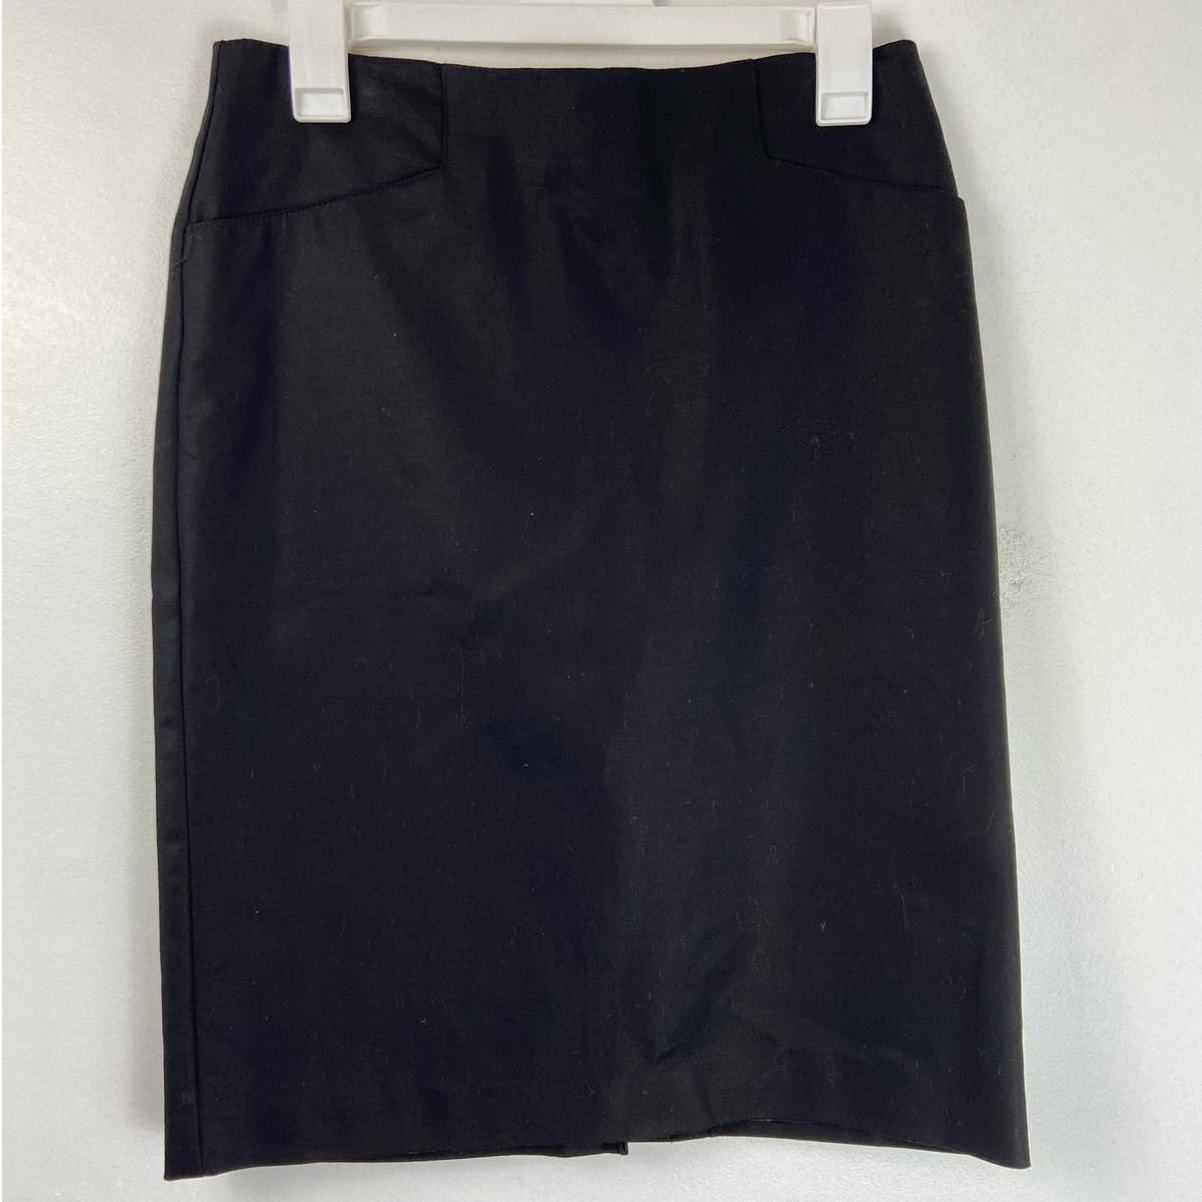 Primary image for Van Heusen Studio Pencil Skirt Womens 6 Zip Back Slit Cotton Stretch Black Lined